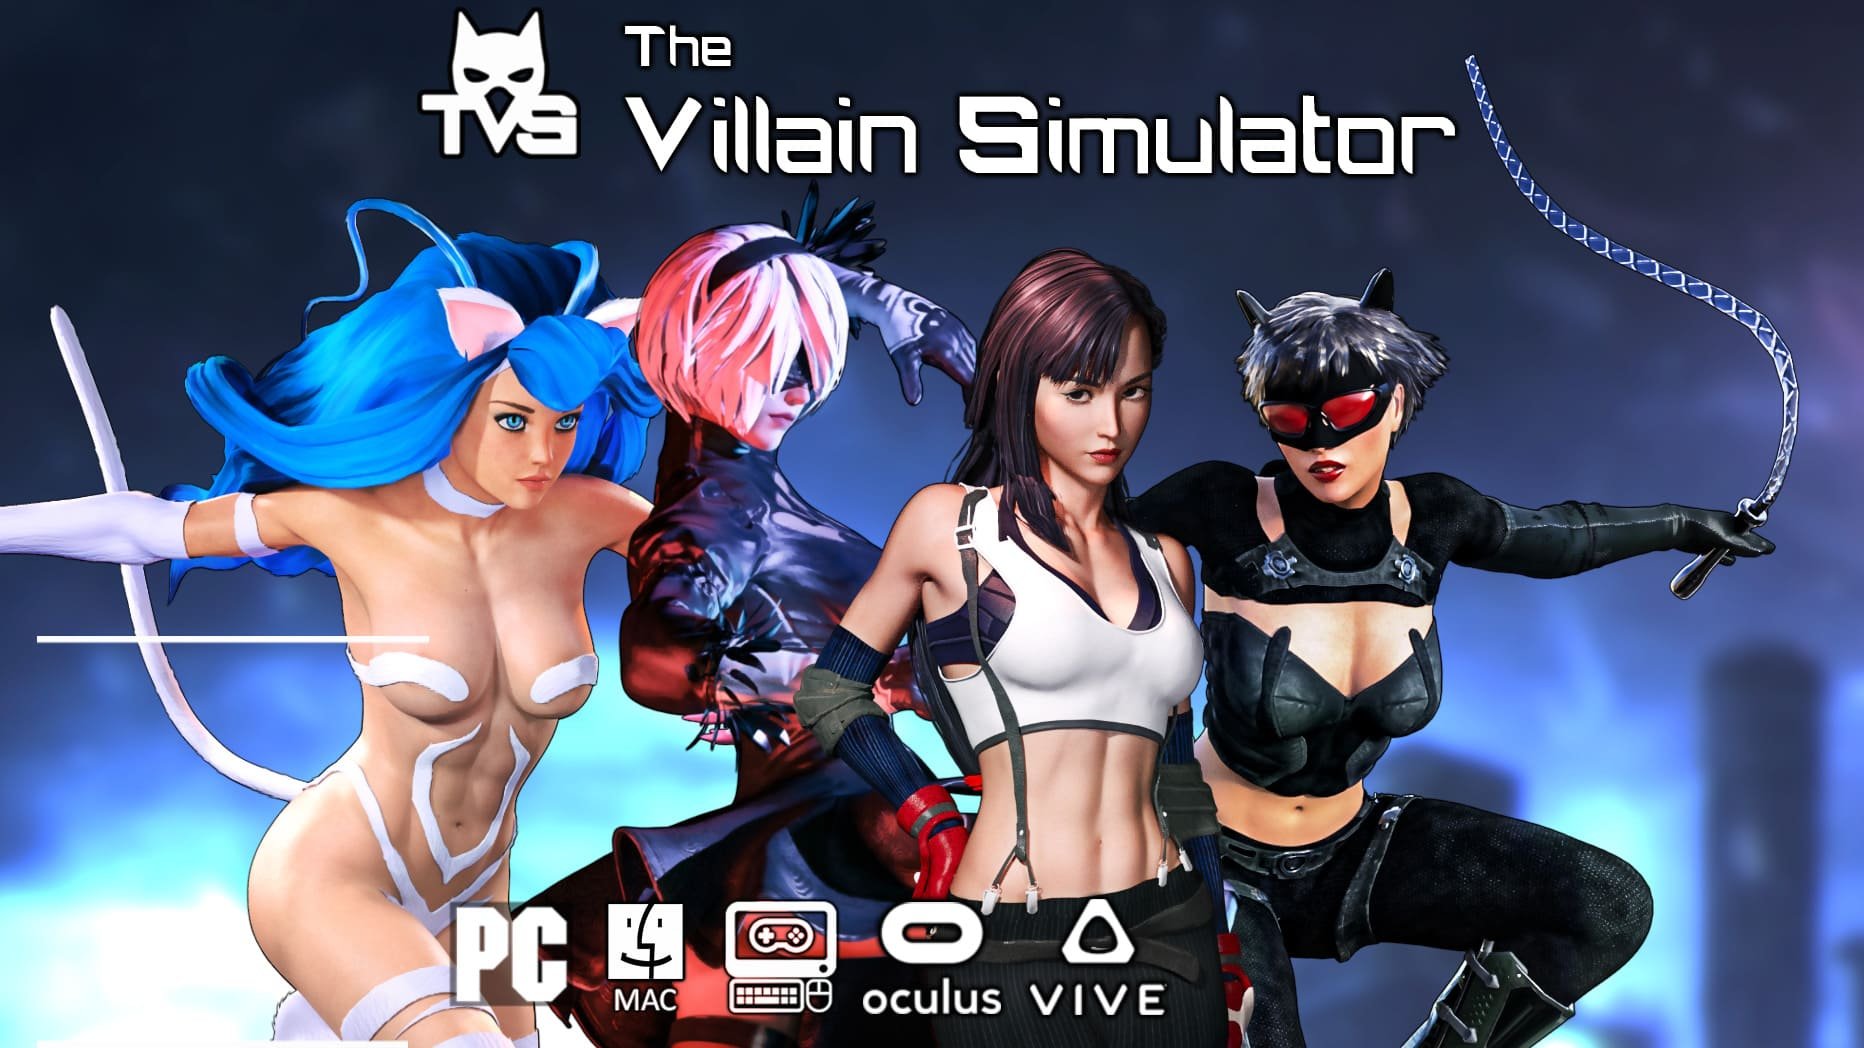 The Villain Simulator VR